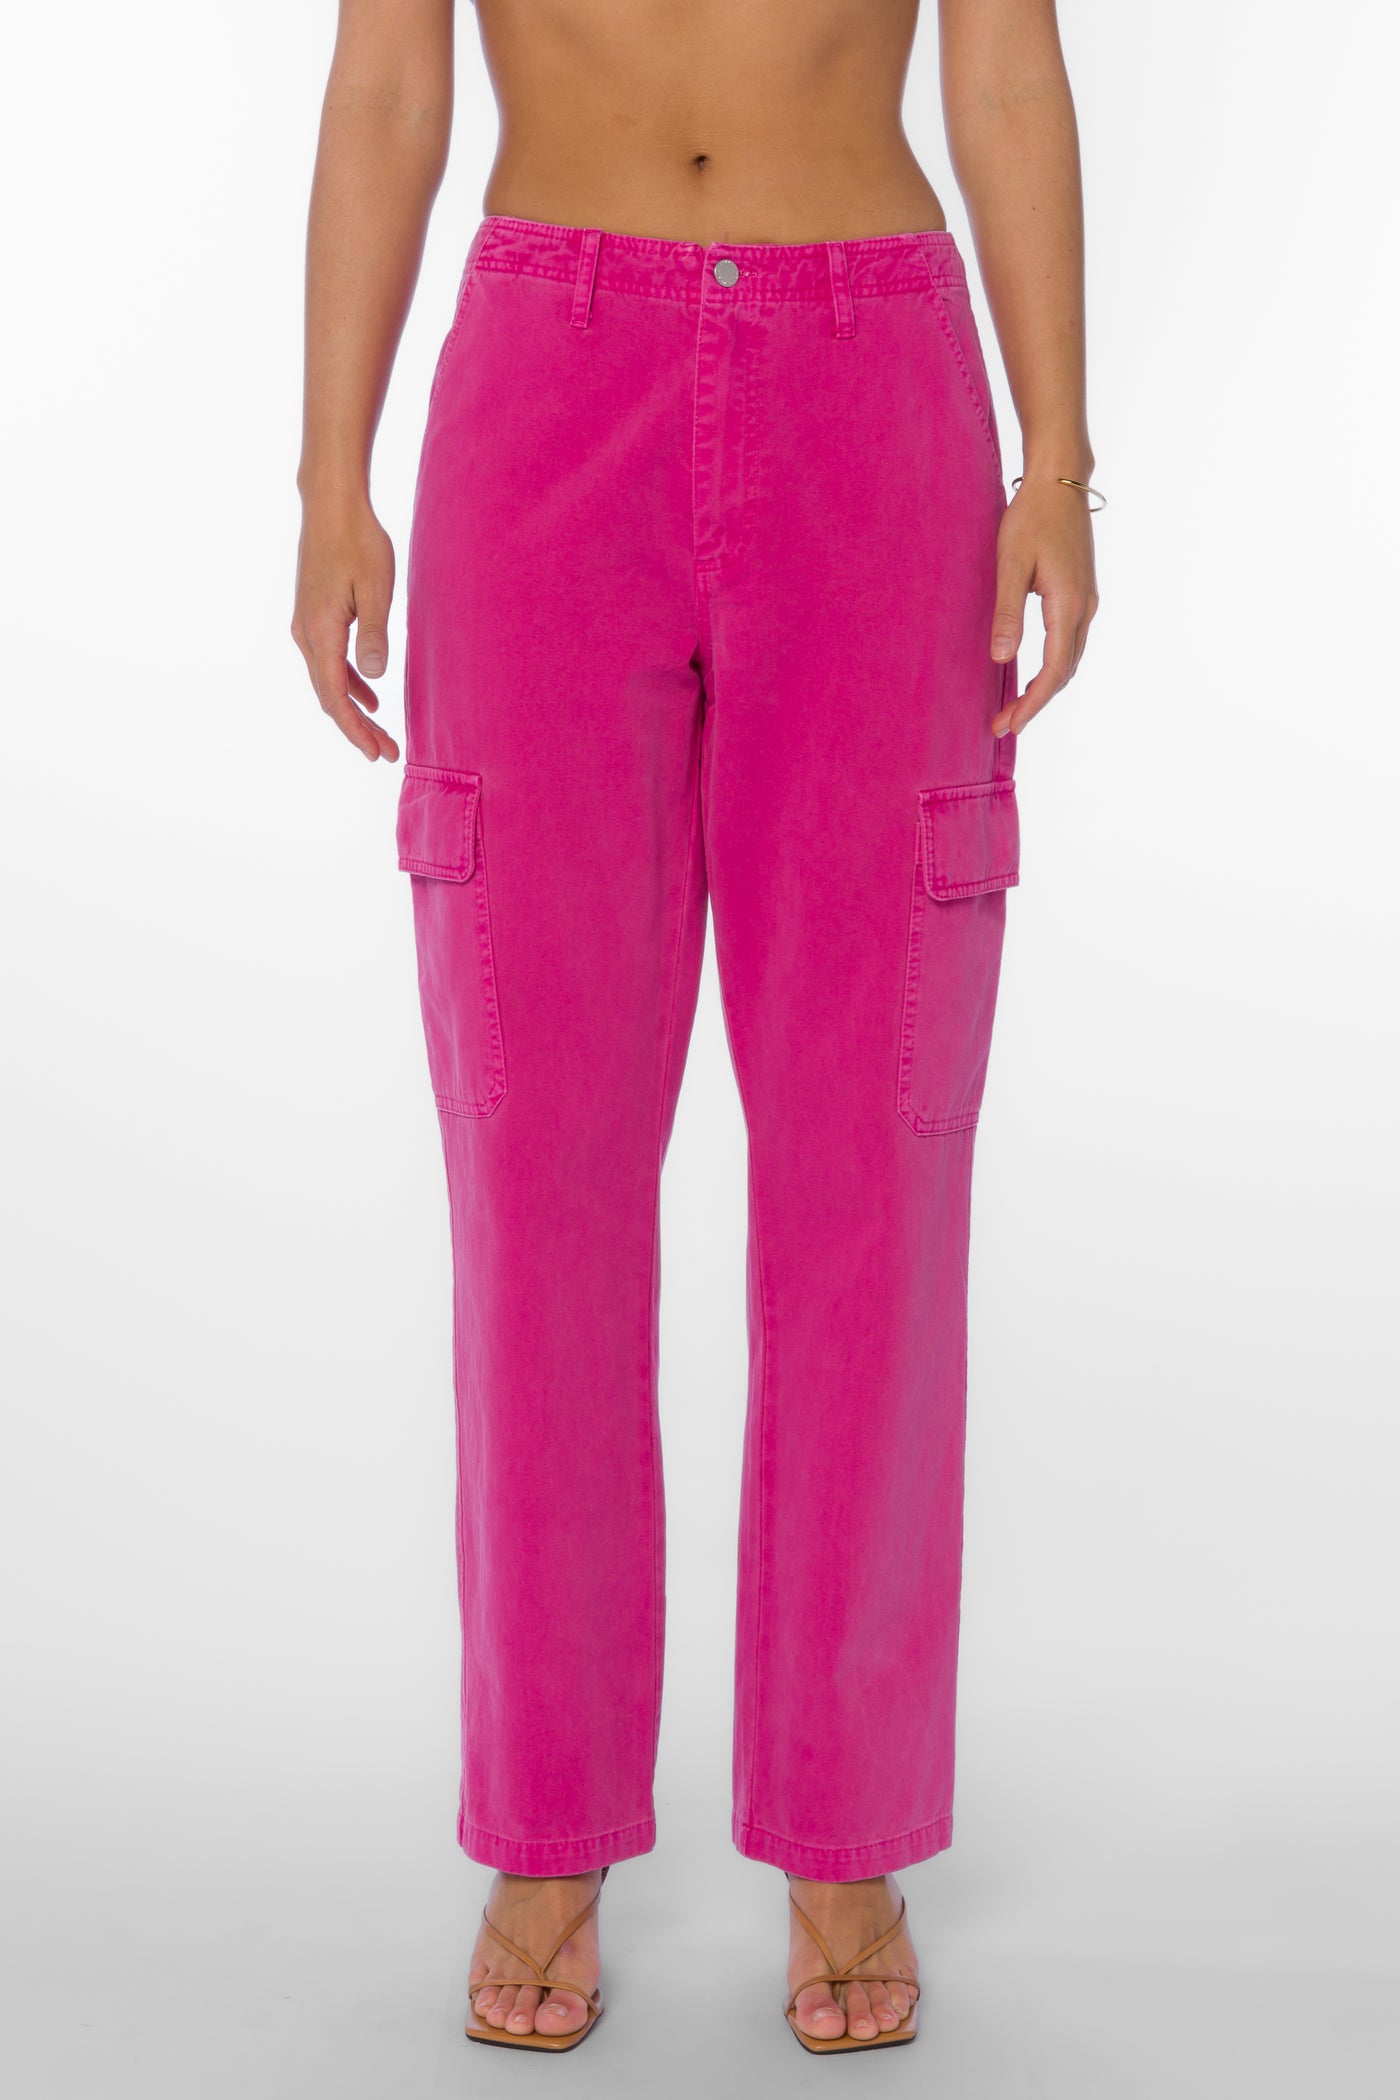 Dusty Hot Pink Pants - Bottoms - Velvet Heart Clothing